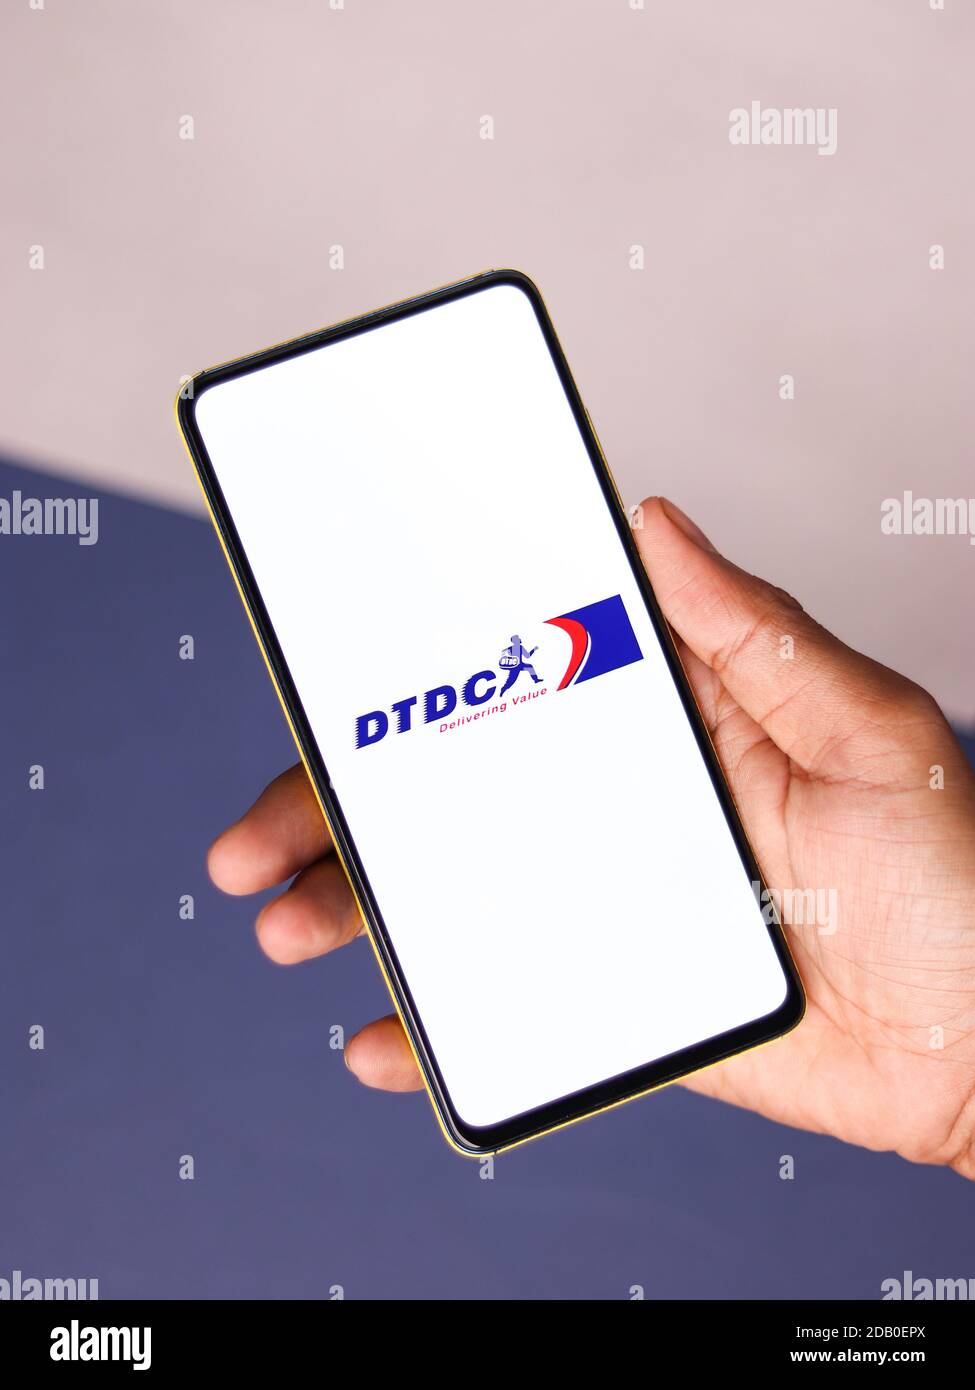 Assam, indien - November 15, 2020 : DTDC-Logo auf Telefon-Bildschirm Stock Bild. Stockfoto